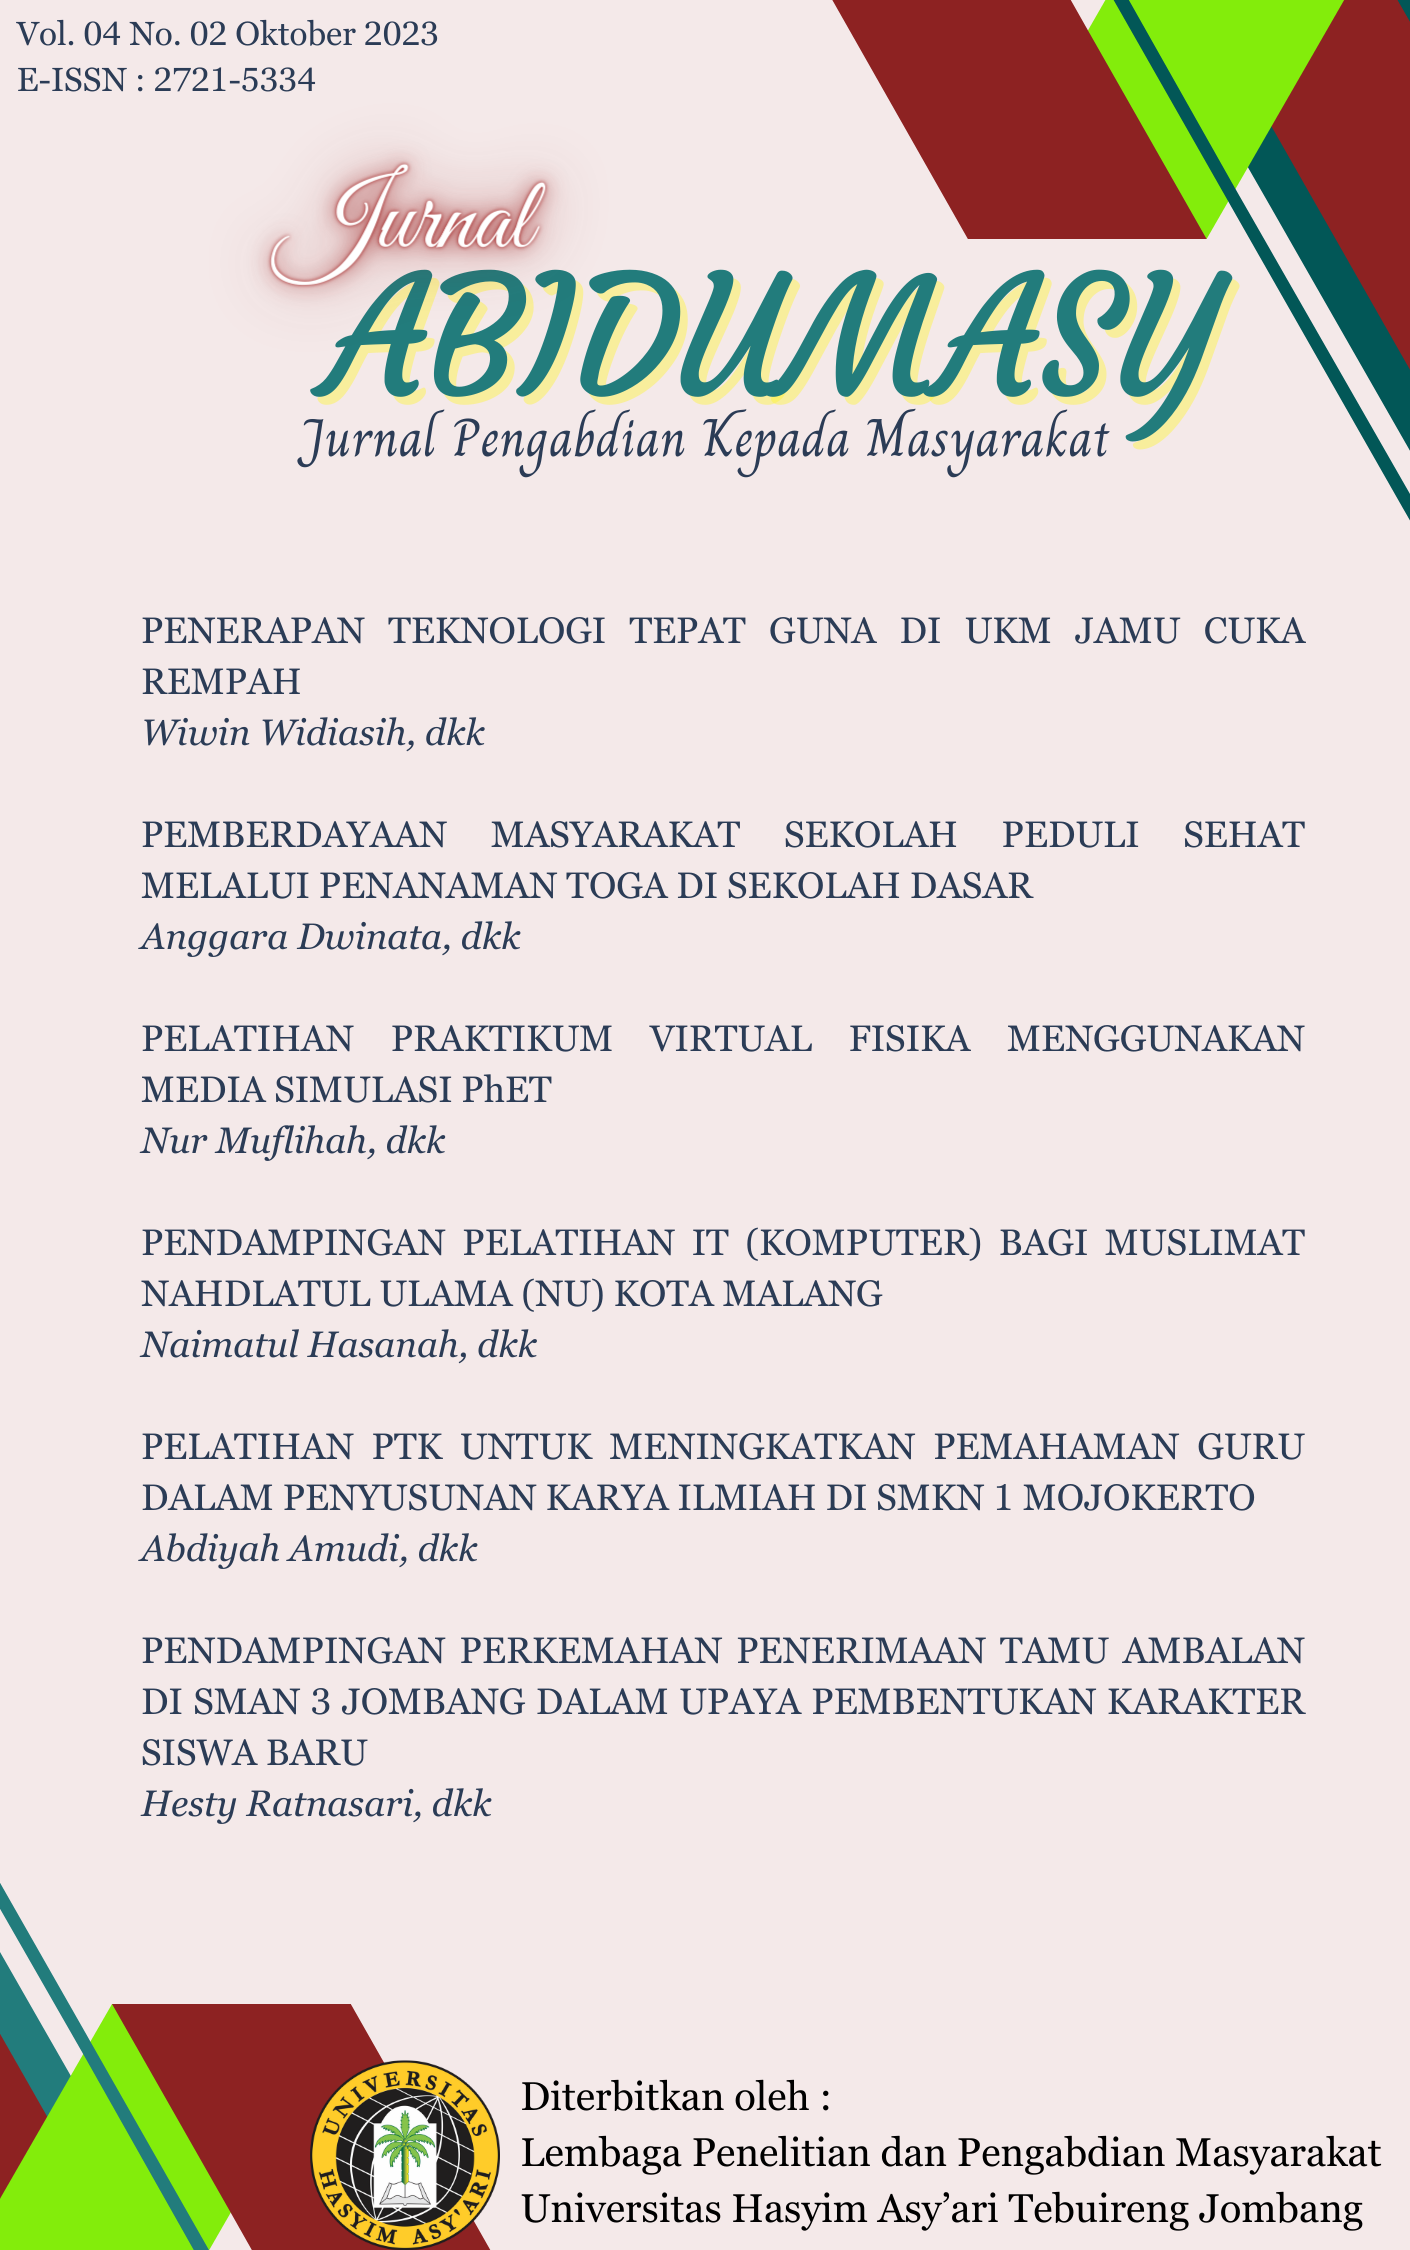 					View Vol. 4 No. 1 (2023): ABIDUMASY : JURNAL PENGABDIAN KEPADA MASYARAKAT
				